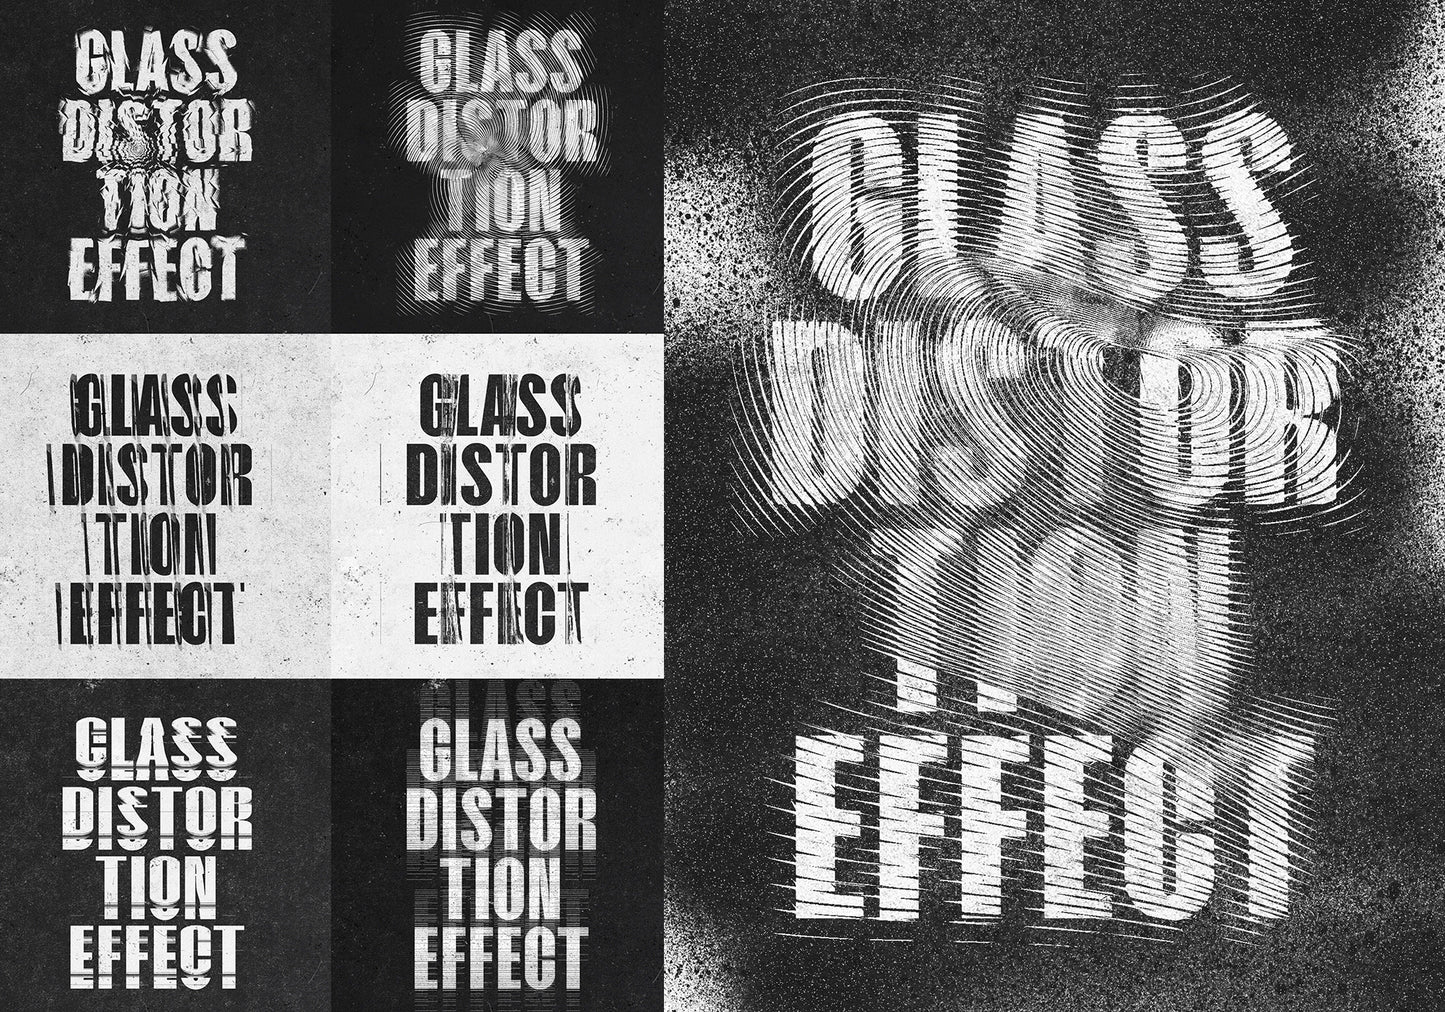 Glass Distortion Effect